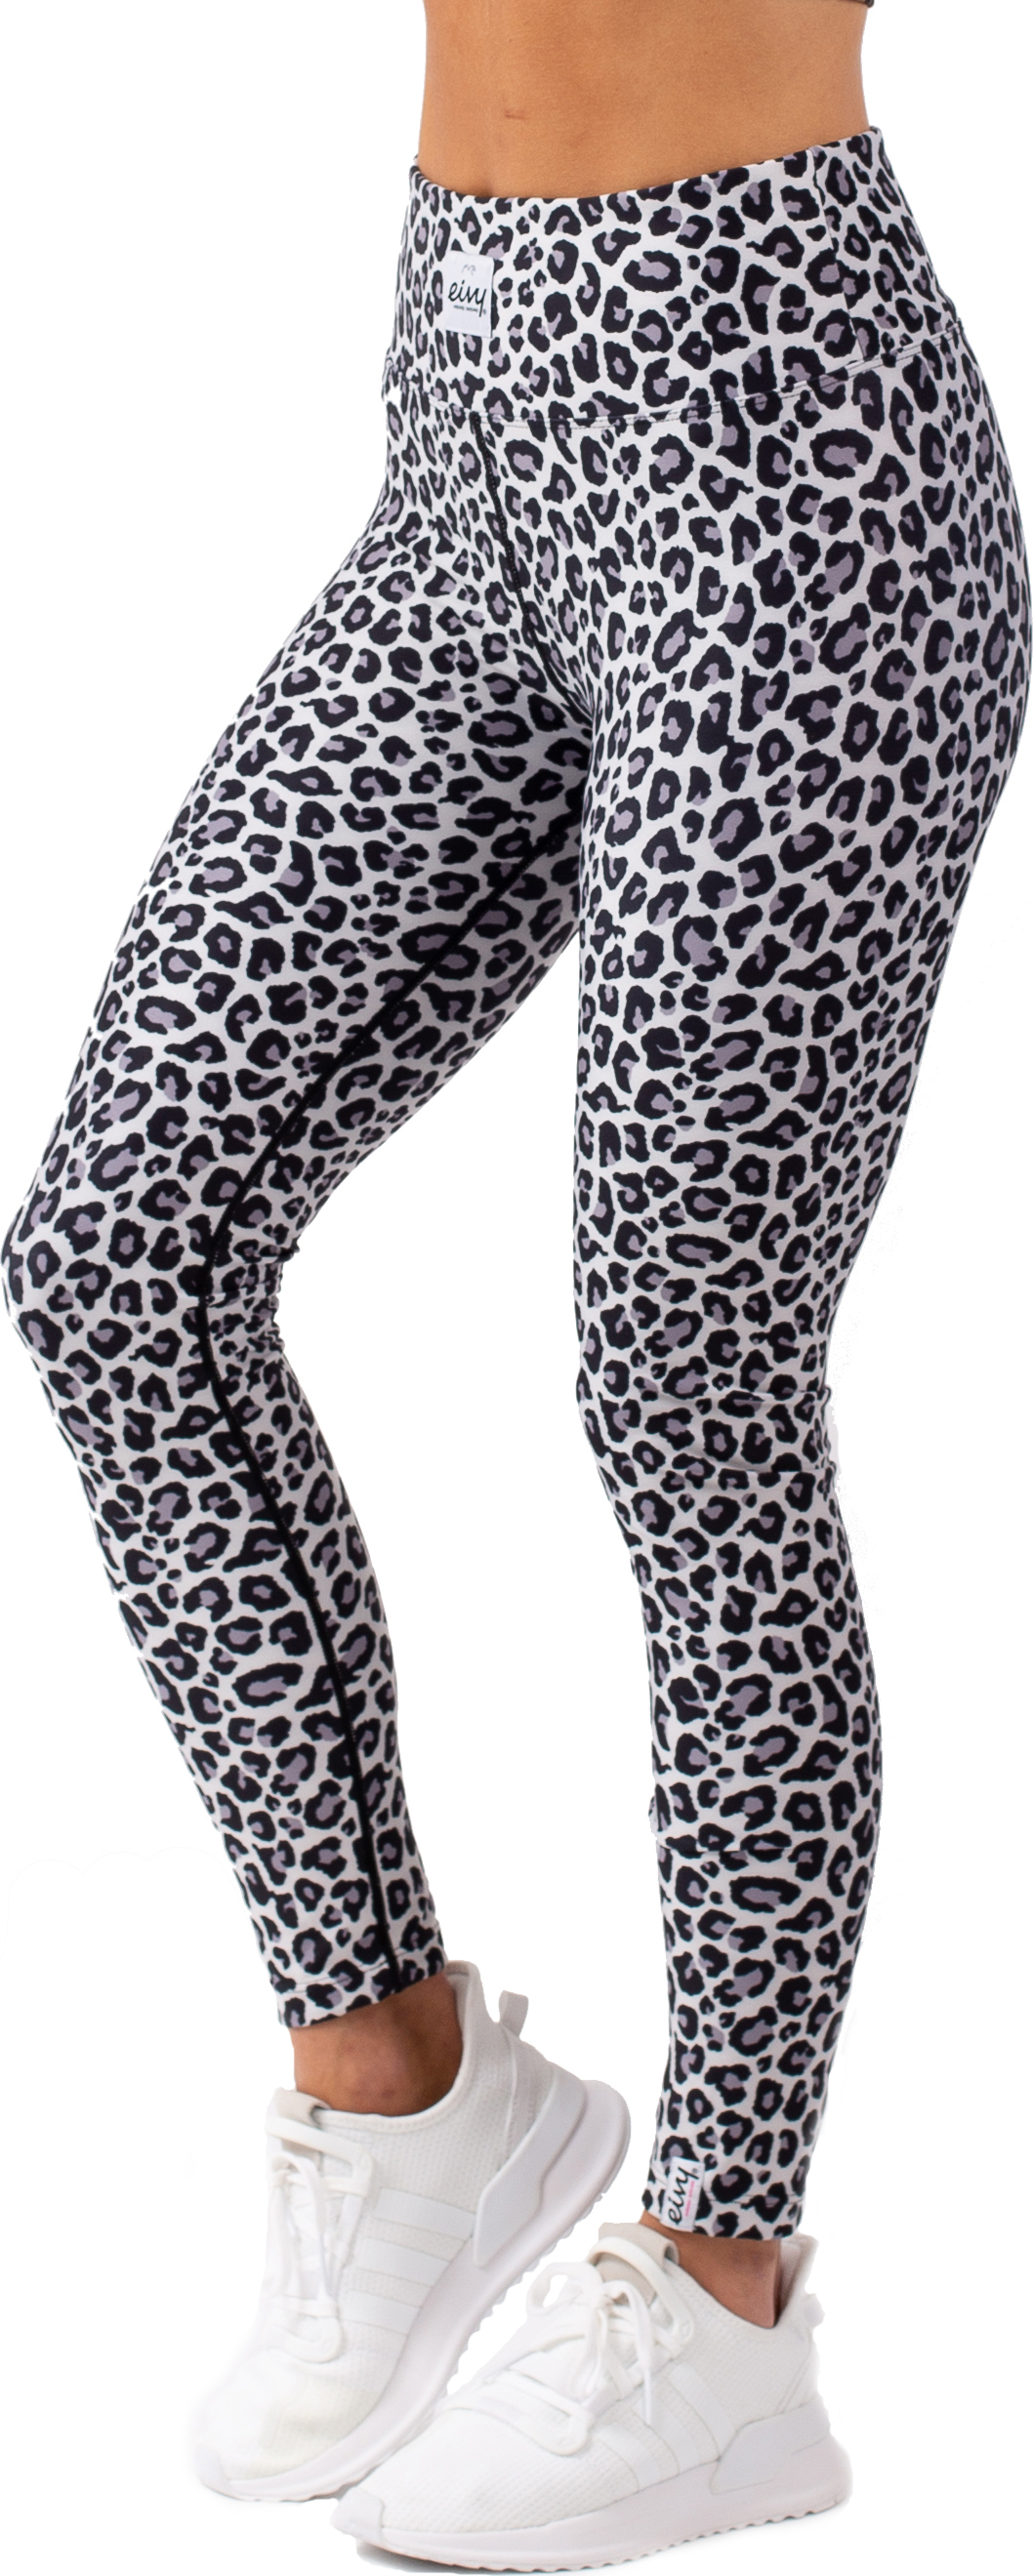 https://www.fjellsport.no/assets/blobs/eivy-women-s-icecold-tights-snow-leopard-099a390e3c.jpeg